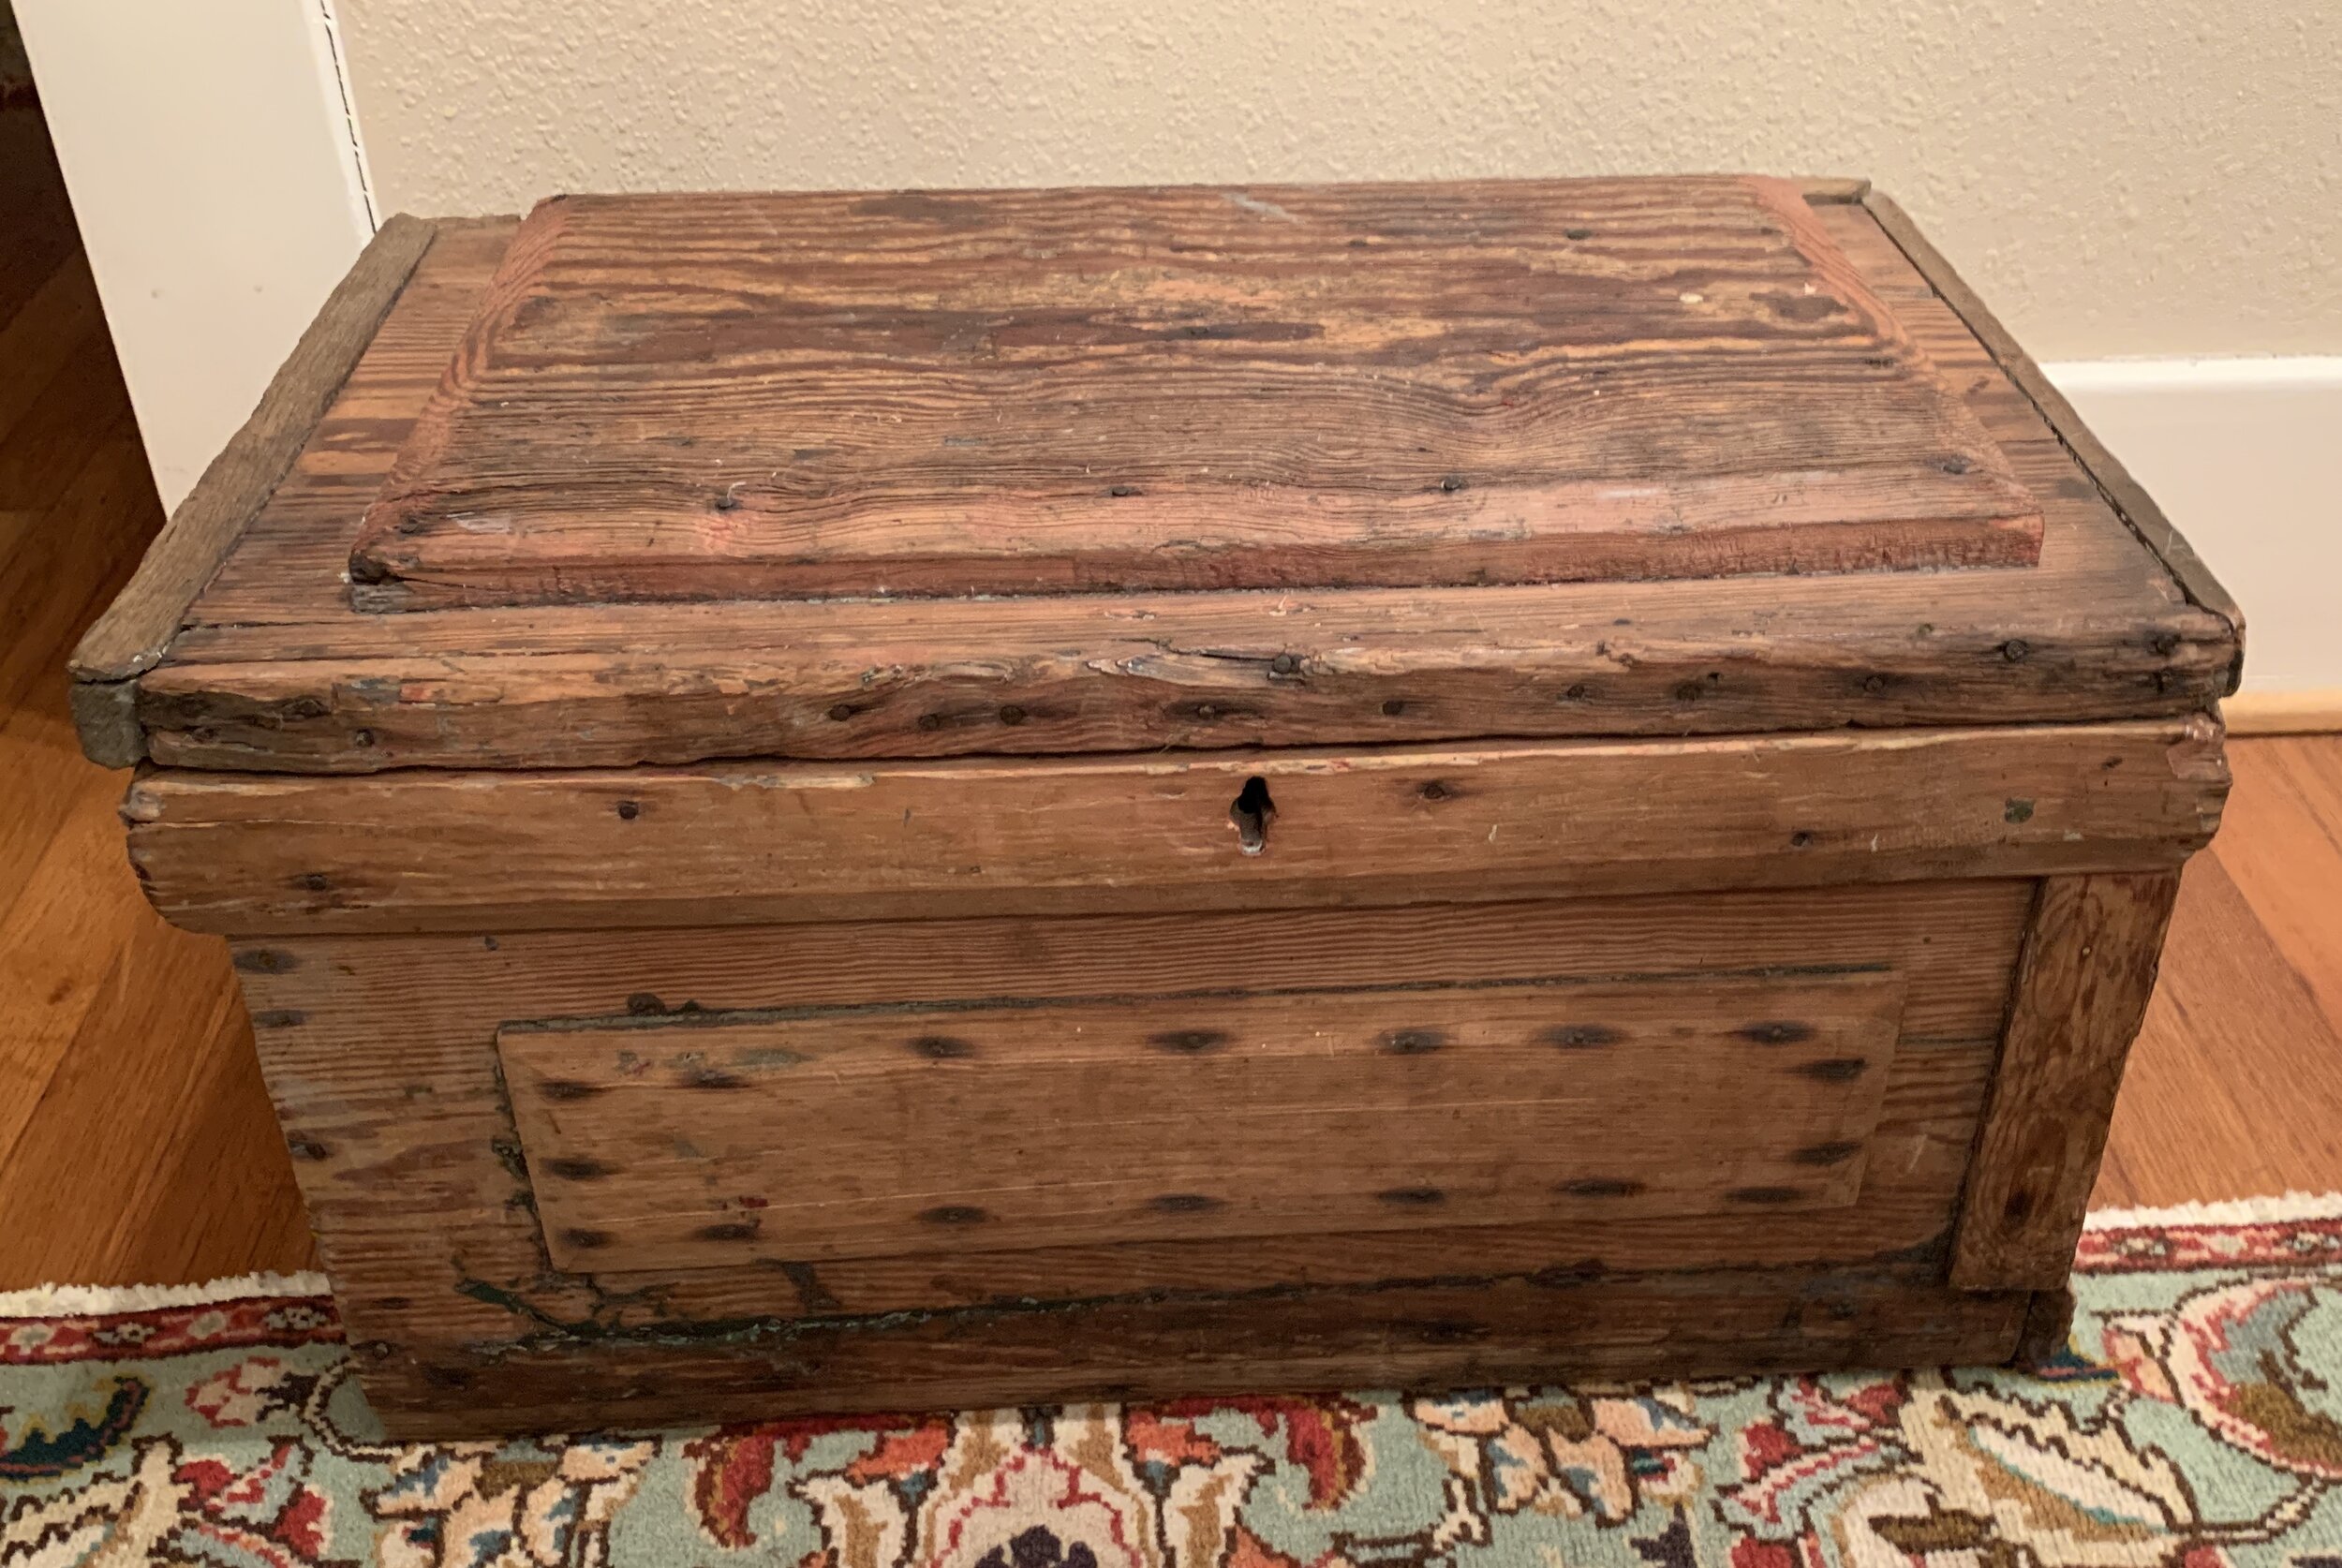 Antique Solid Wood Storage Box - $275